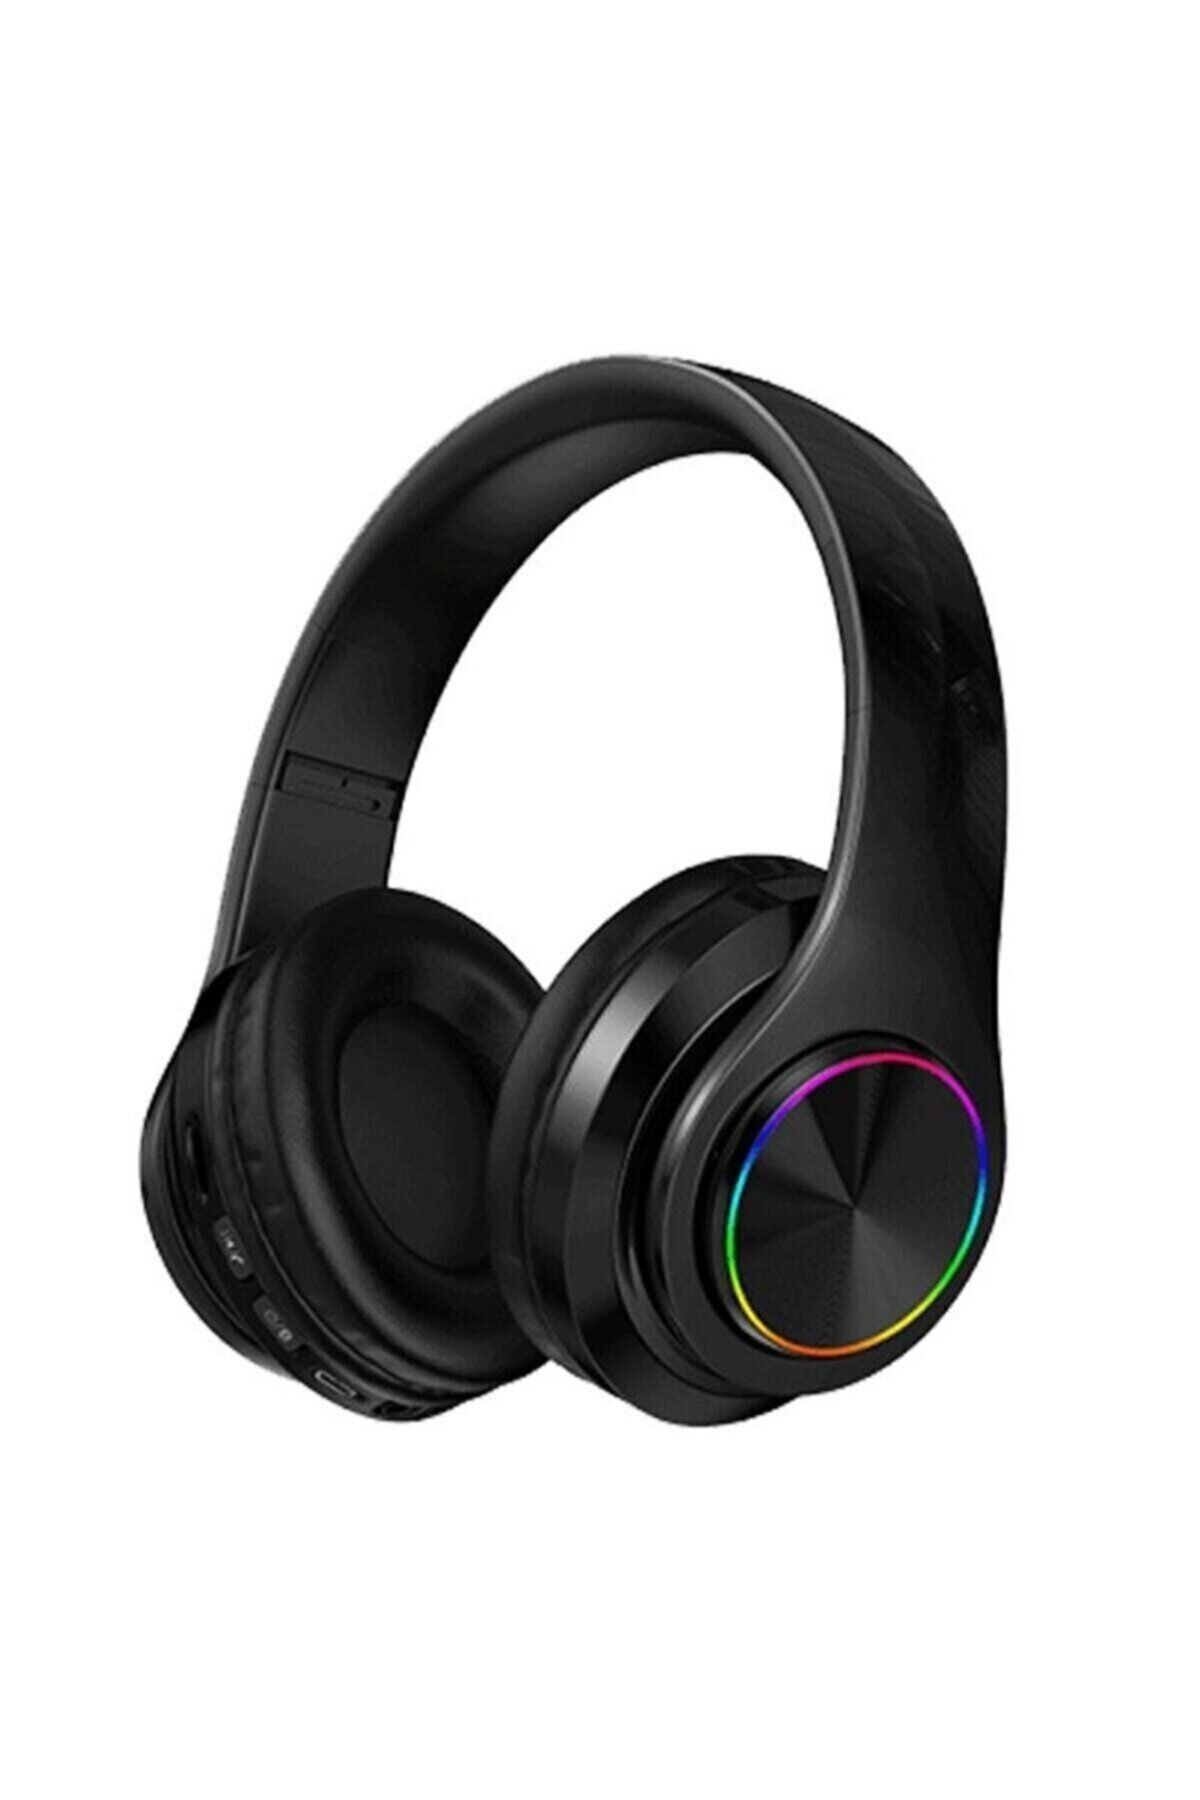 Anyplus B39 Kablosuz Bluetooth Kulaklık Led Işıklı Siyah Kulaküstü Kulaklı Her Telefona Uyumlu